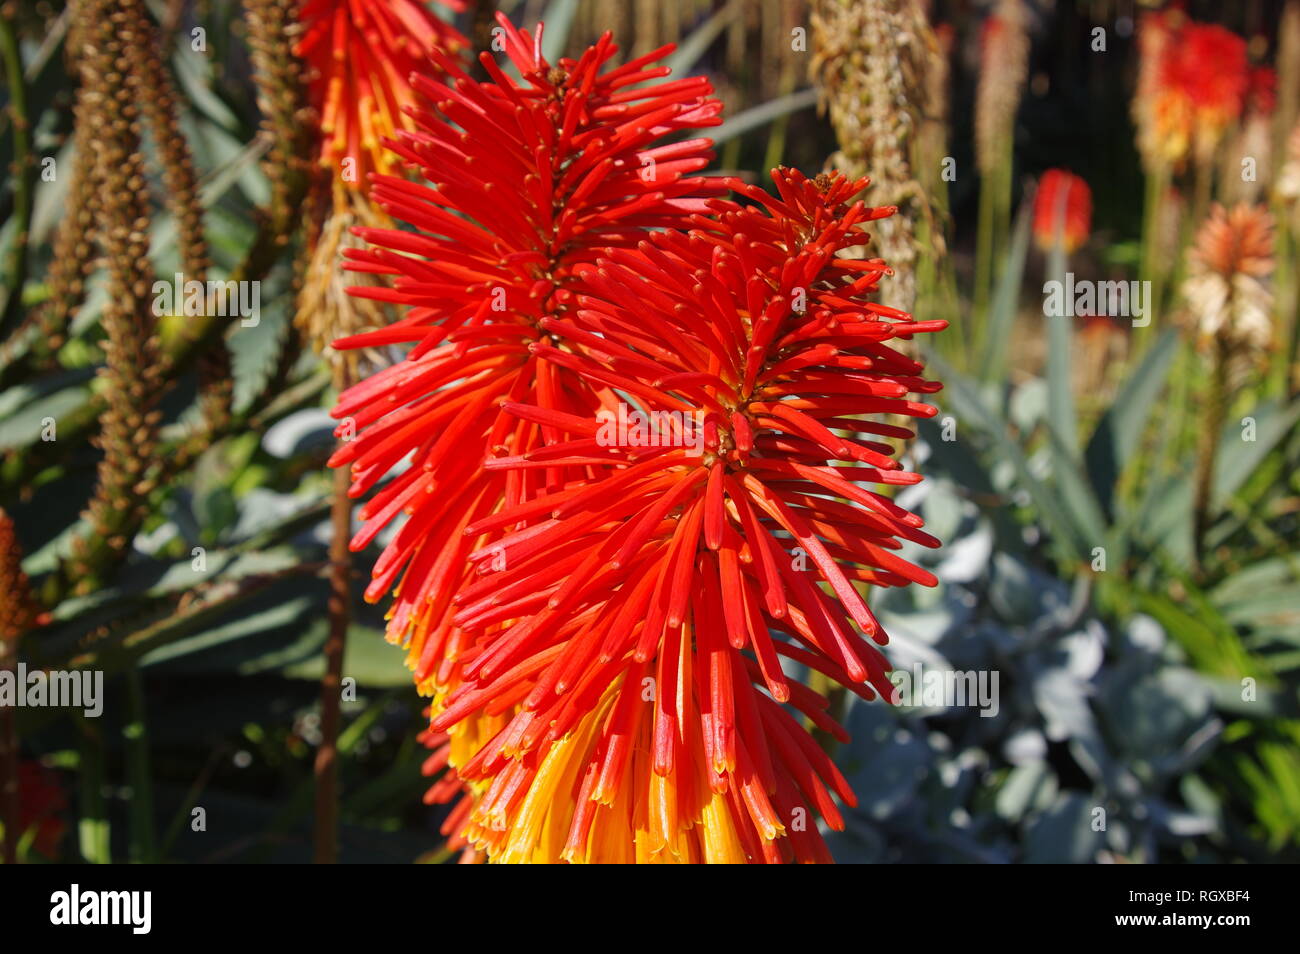 Orange and yellow plant in Australia, from the Melbourne Zoo. Australian Flower, foliage plant. Stock Photo